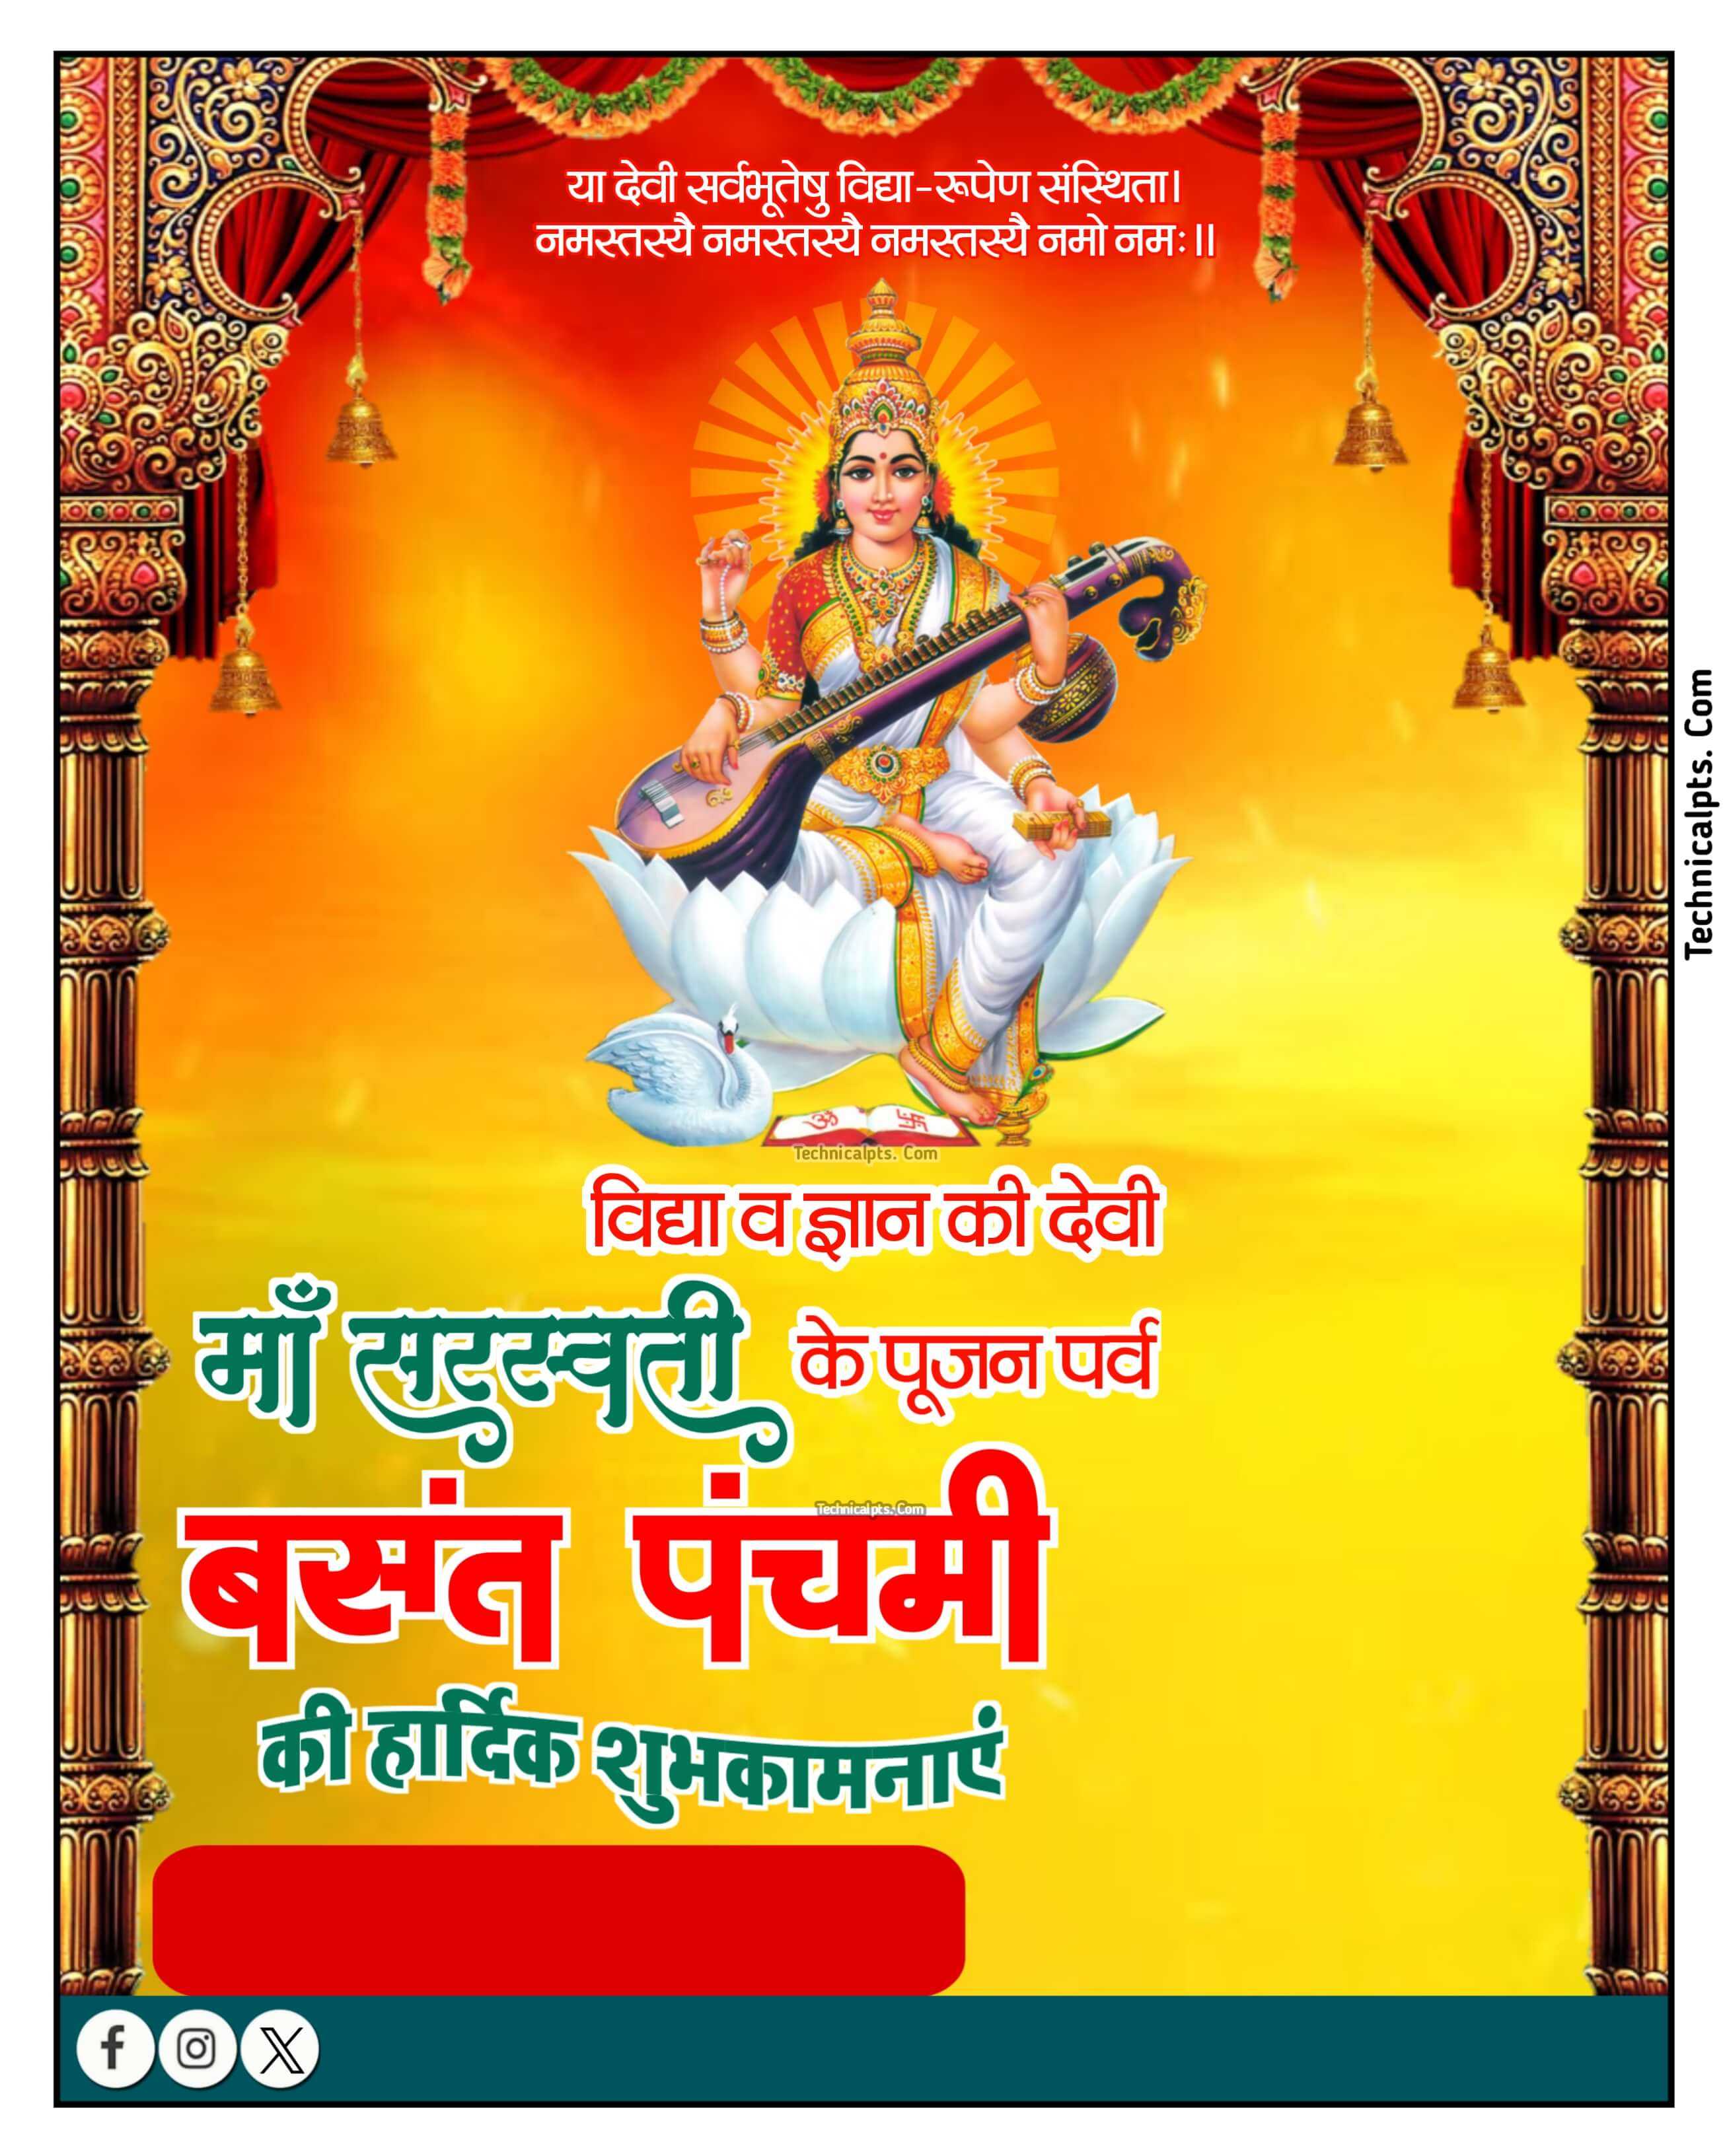 बसंत पंचमी पोस्टर| Saraswati Puja poster plp file download| Saraswati Puja ka poster Kaise banaen| Basant panchmi plp file